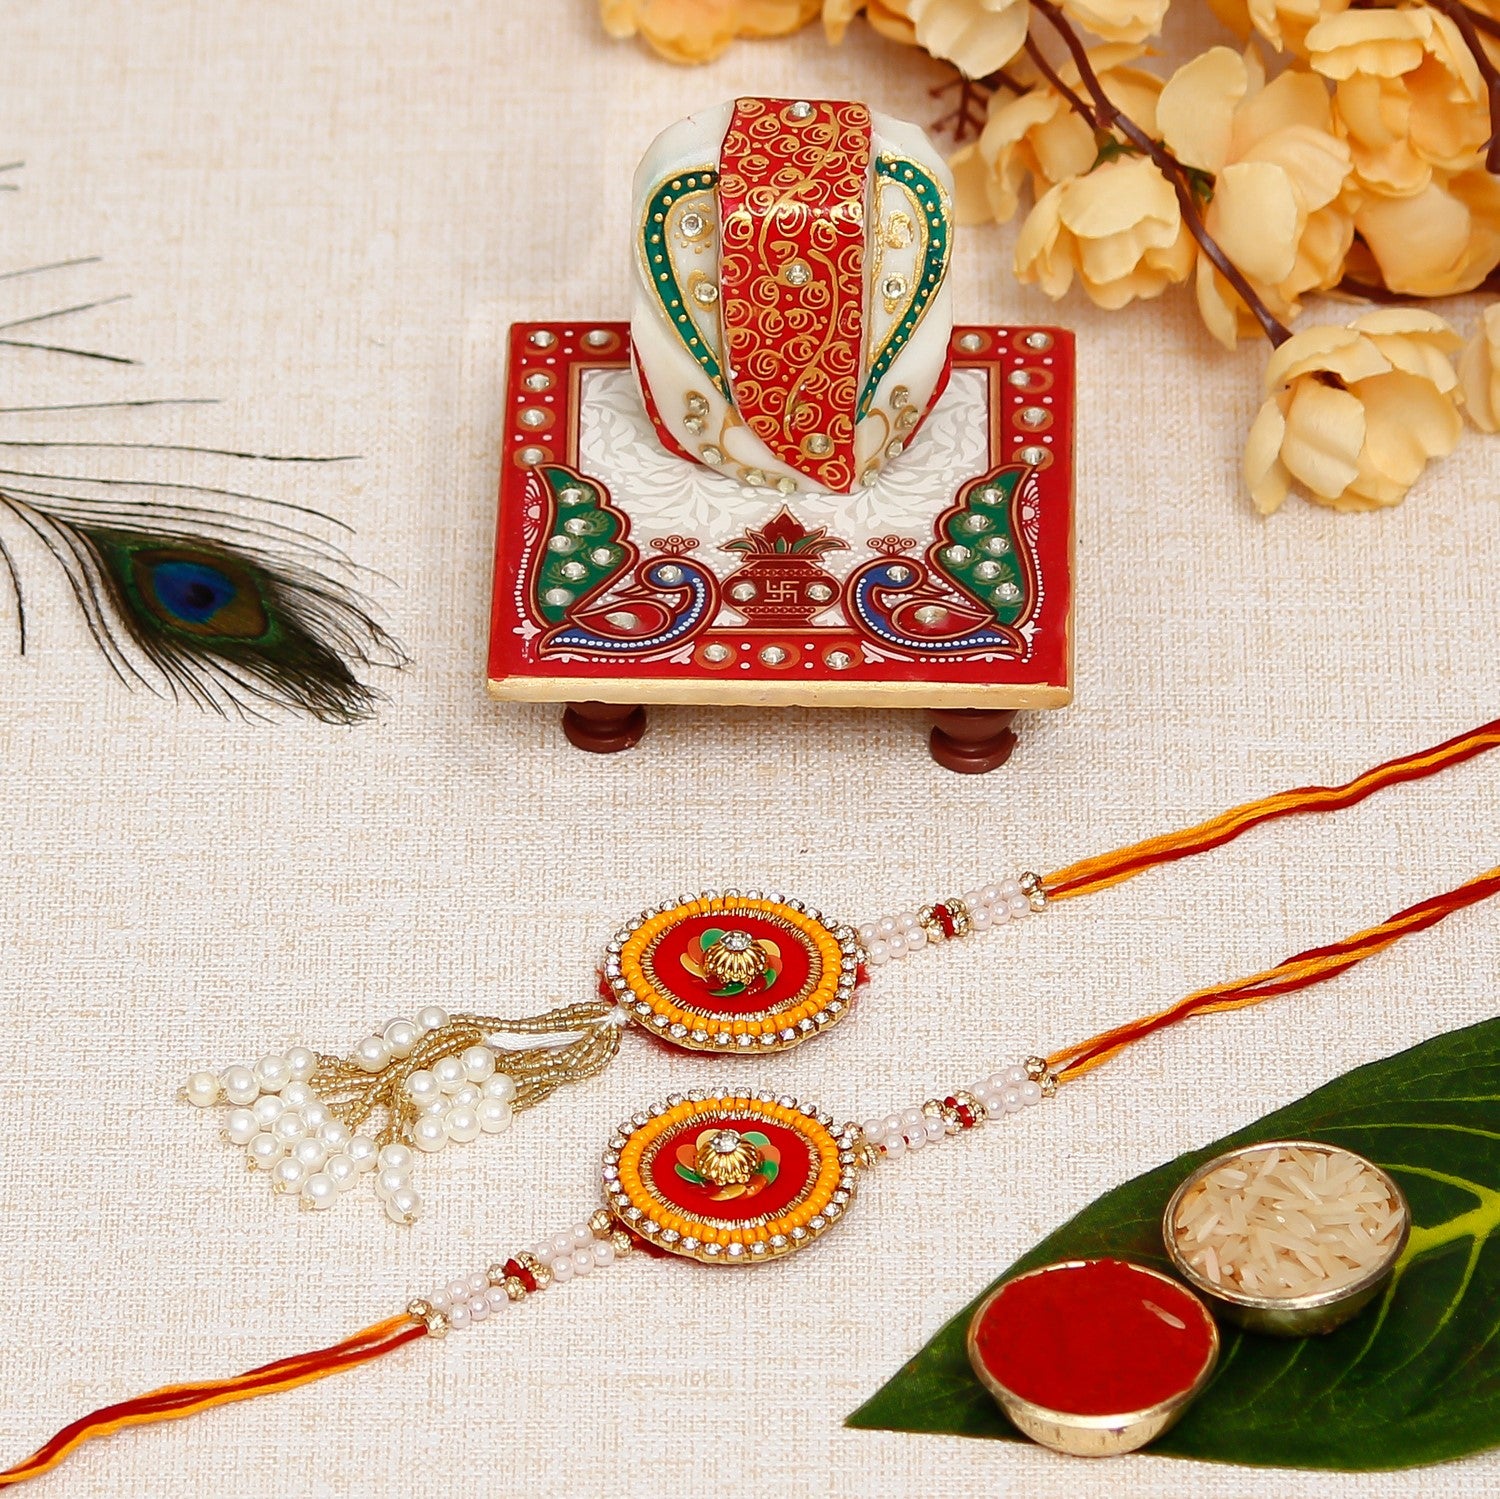 Designer Handcrafted Premium Bhaiya Bhabhi Rakhi with Lord Ganesha on Marble Chowki and Roli Chawal Pack